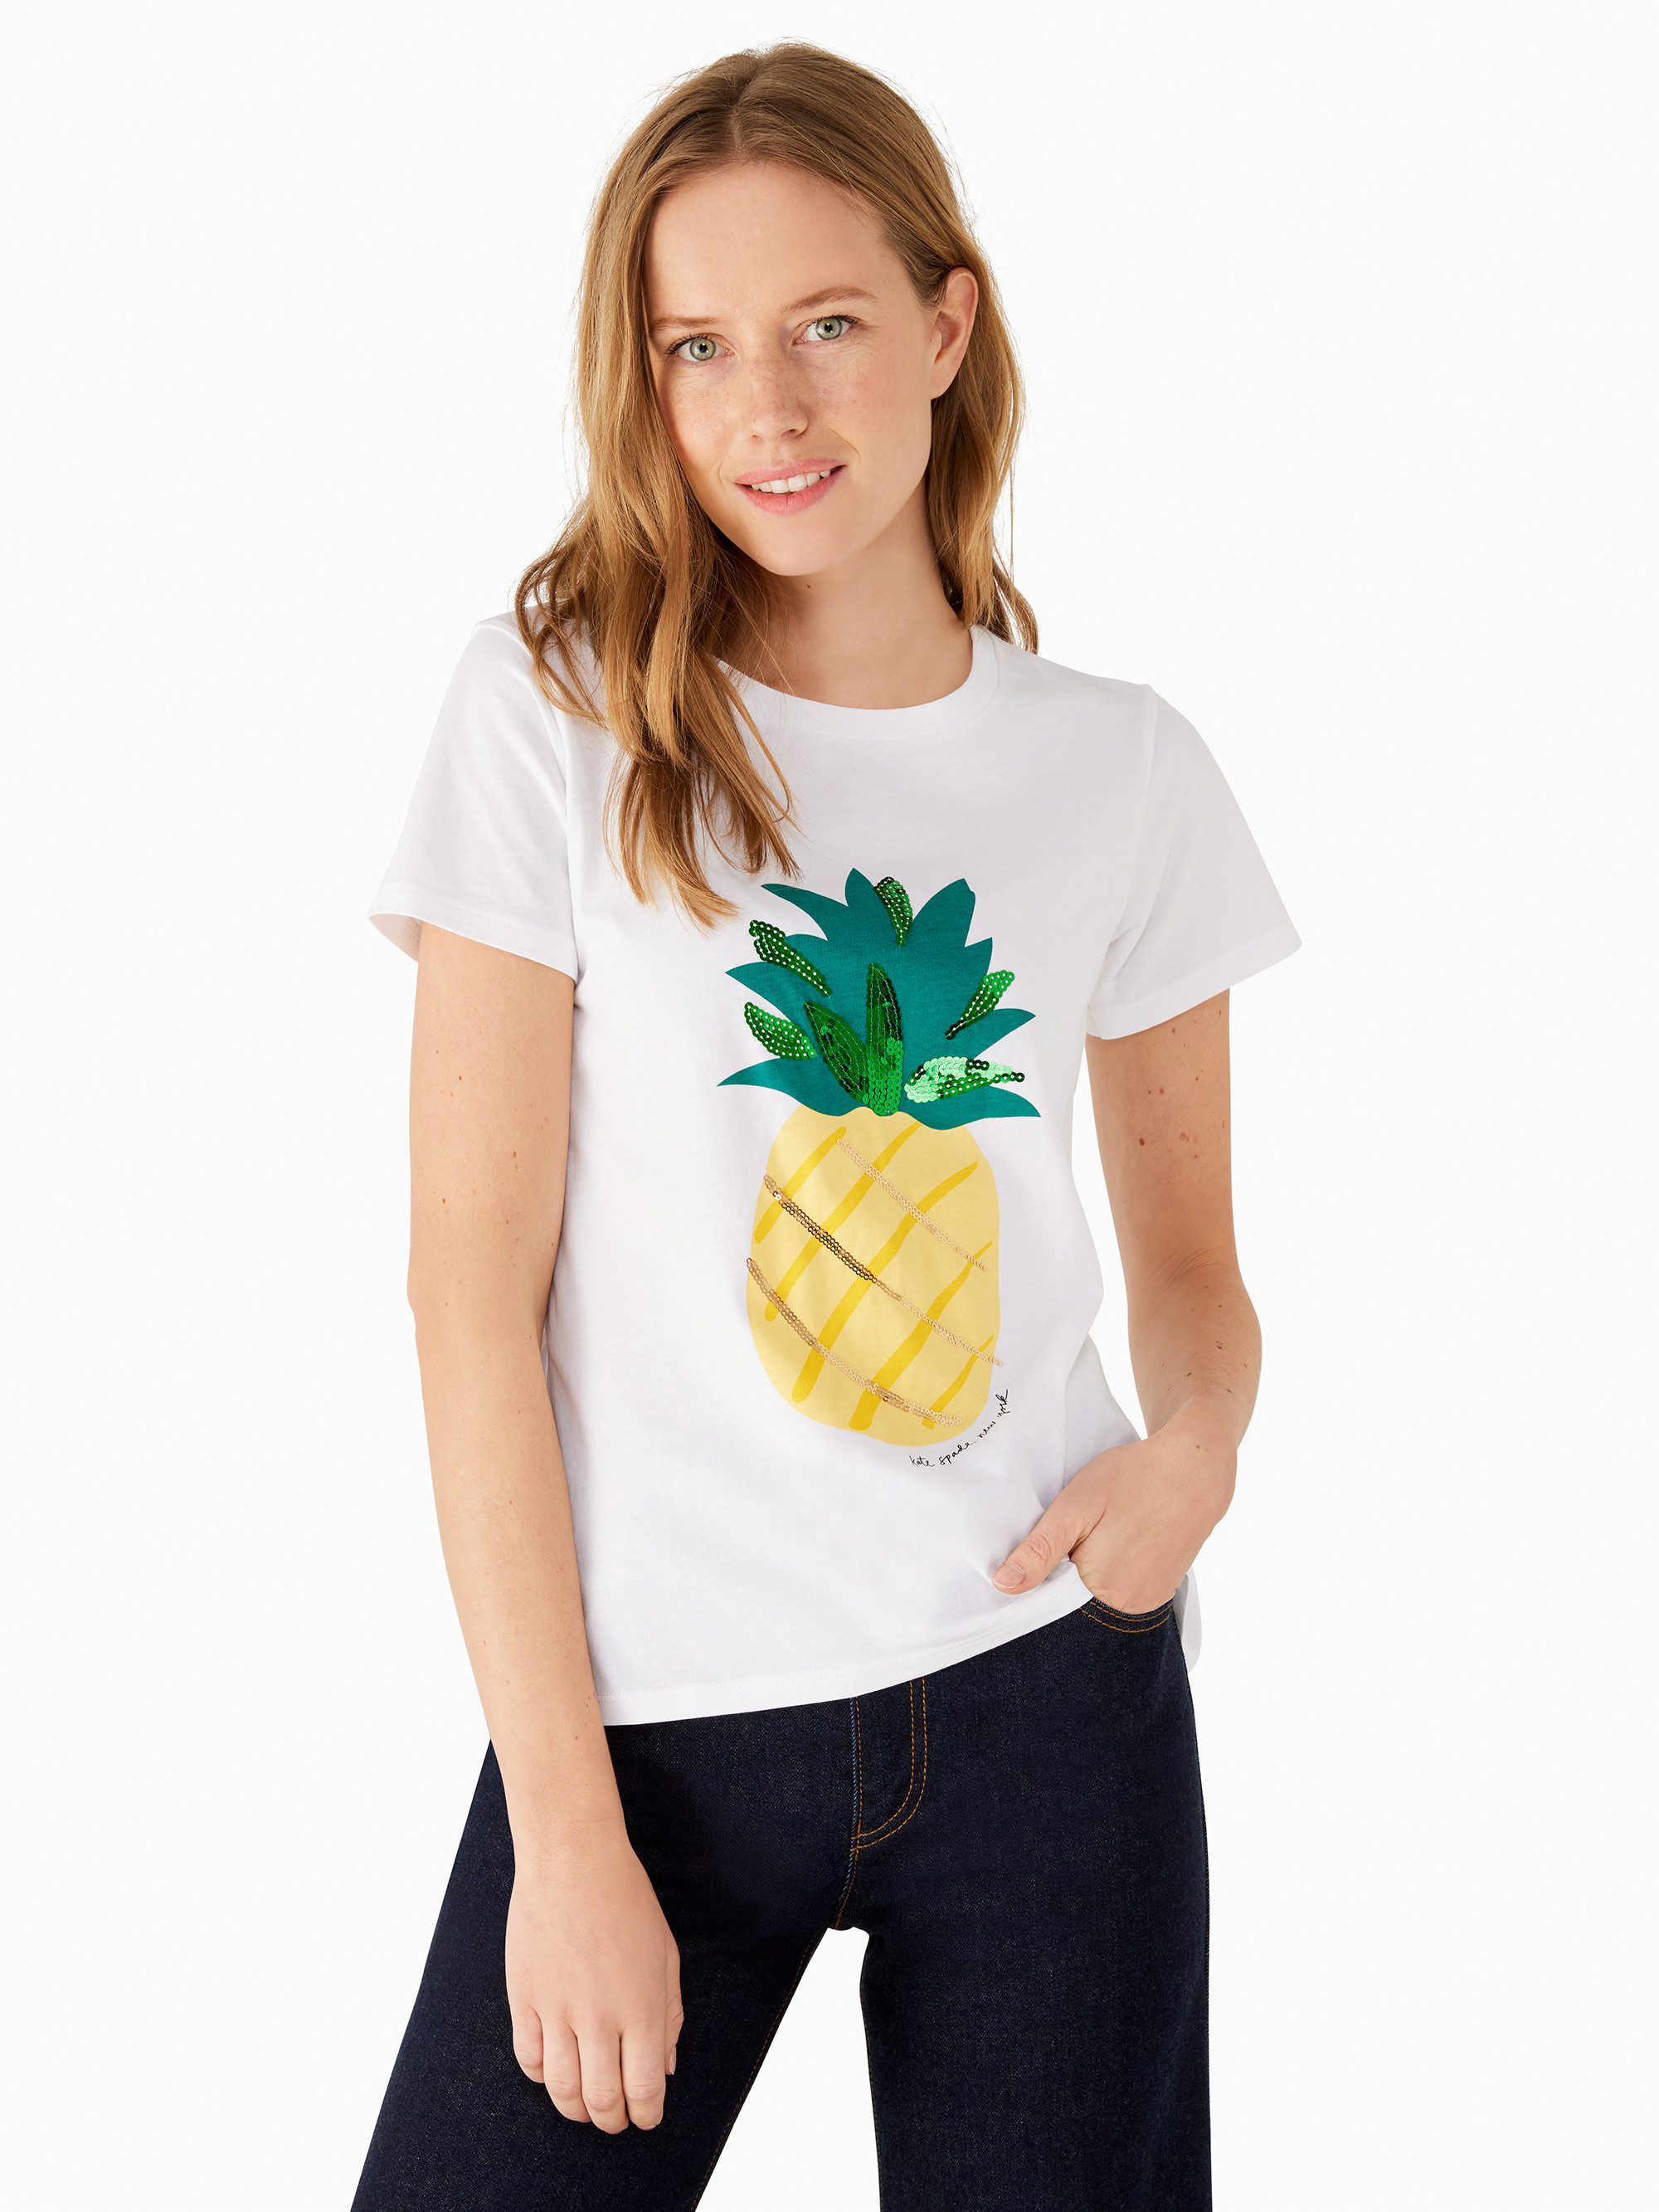 Kate Spade Pineapple T Shirt